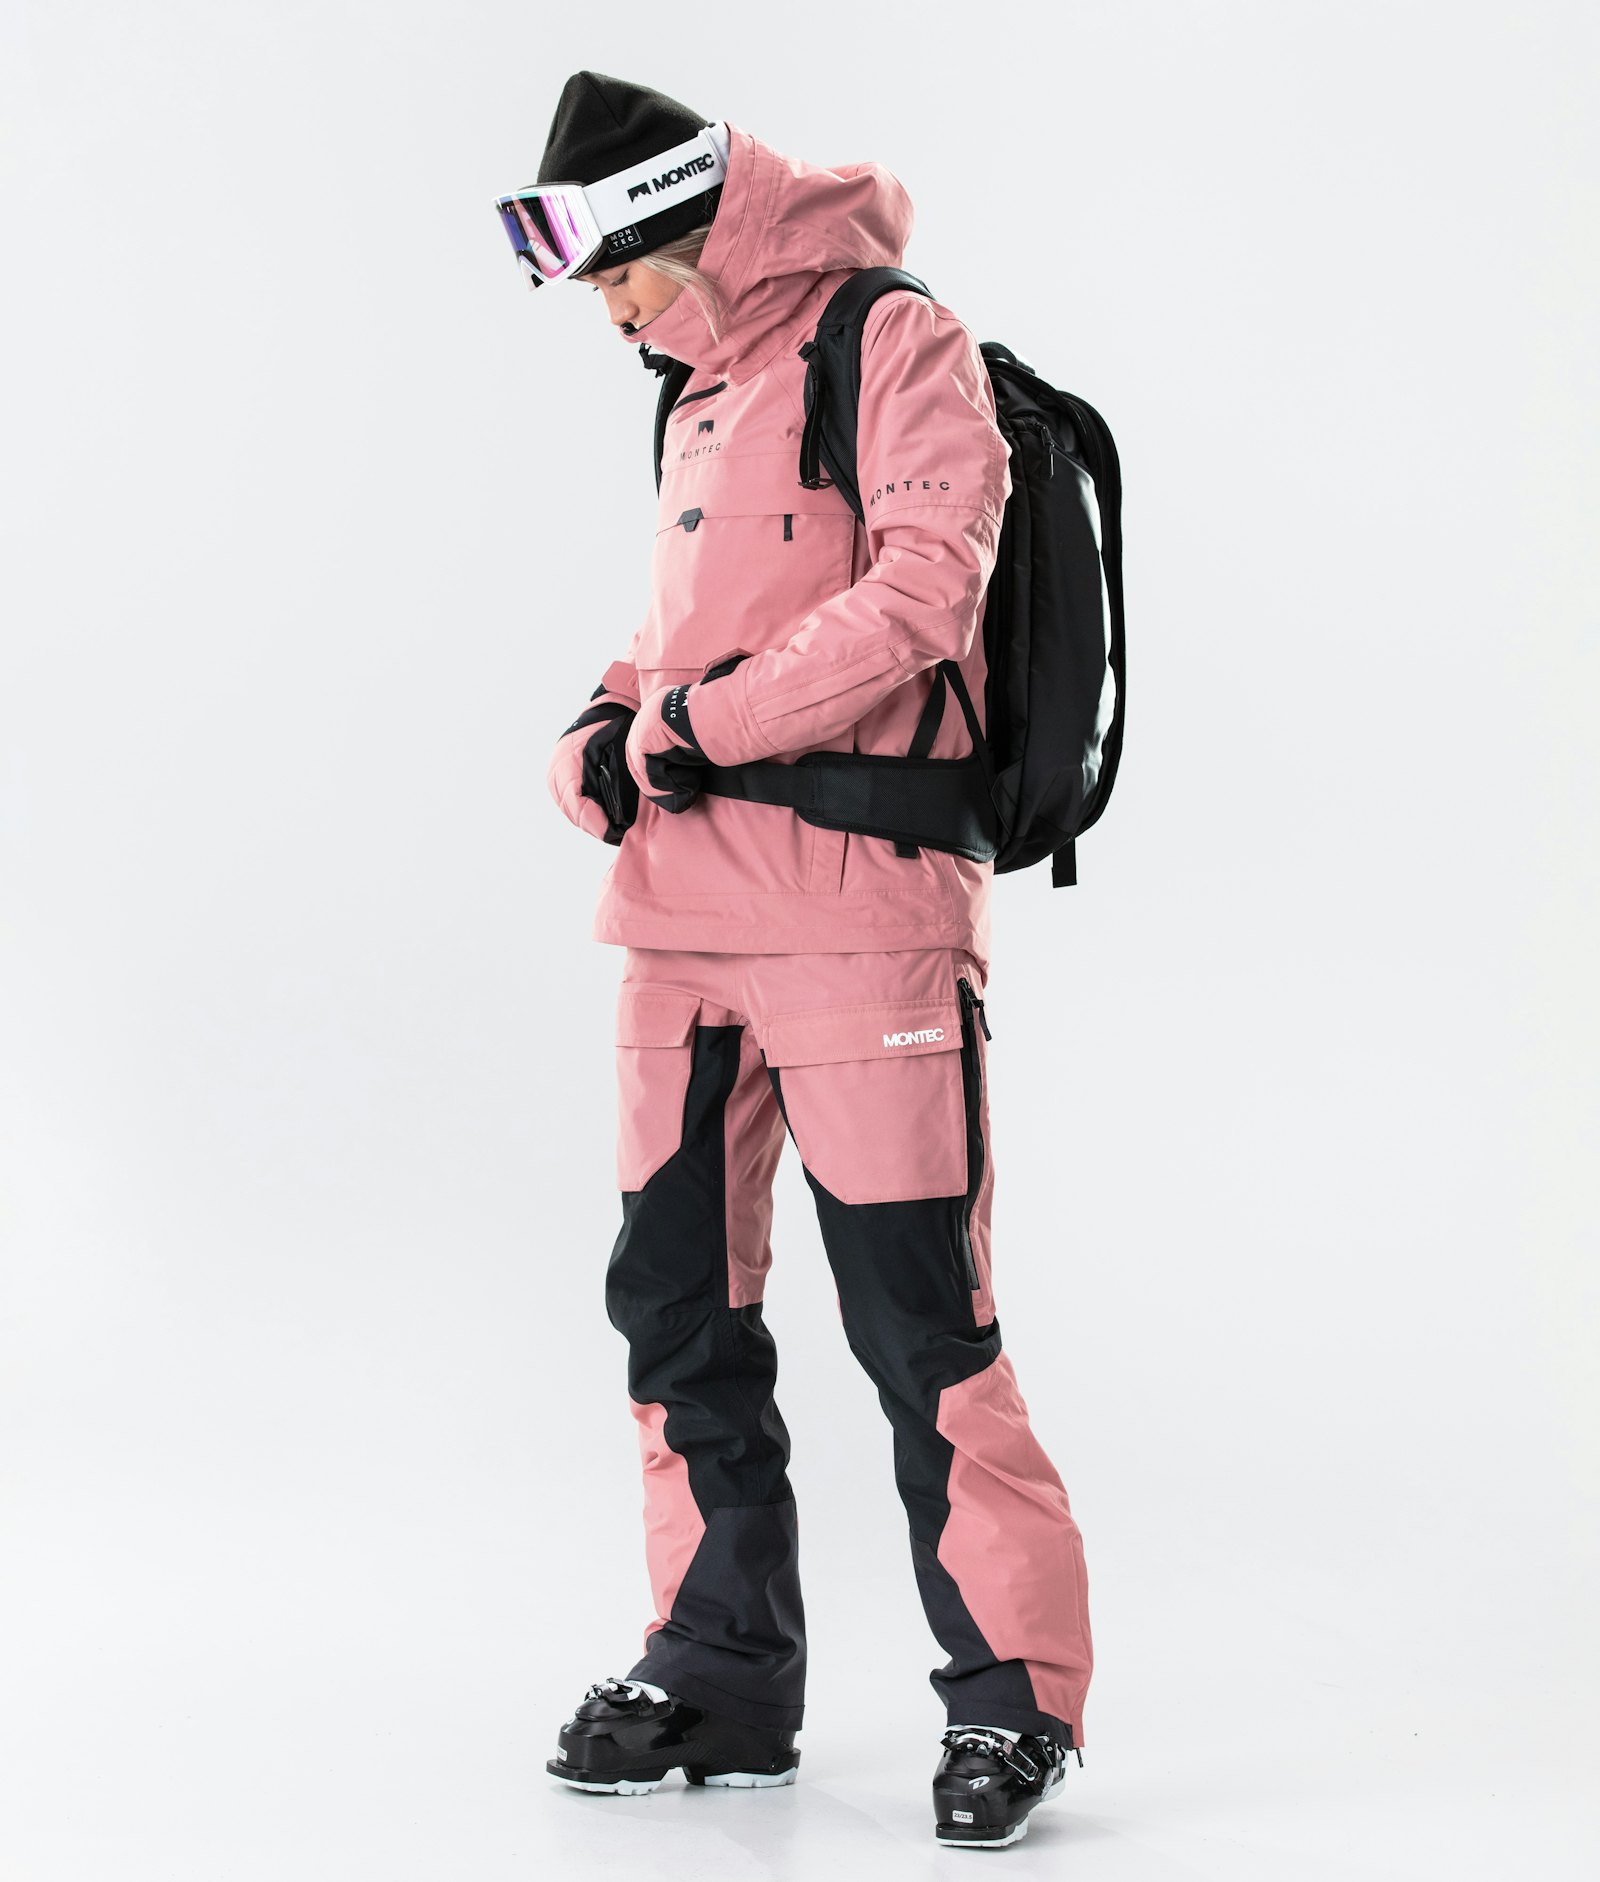 Dune W 2020 Veste de Ski Femme Pink